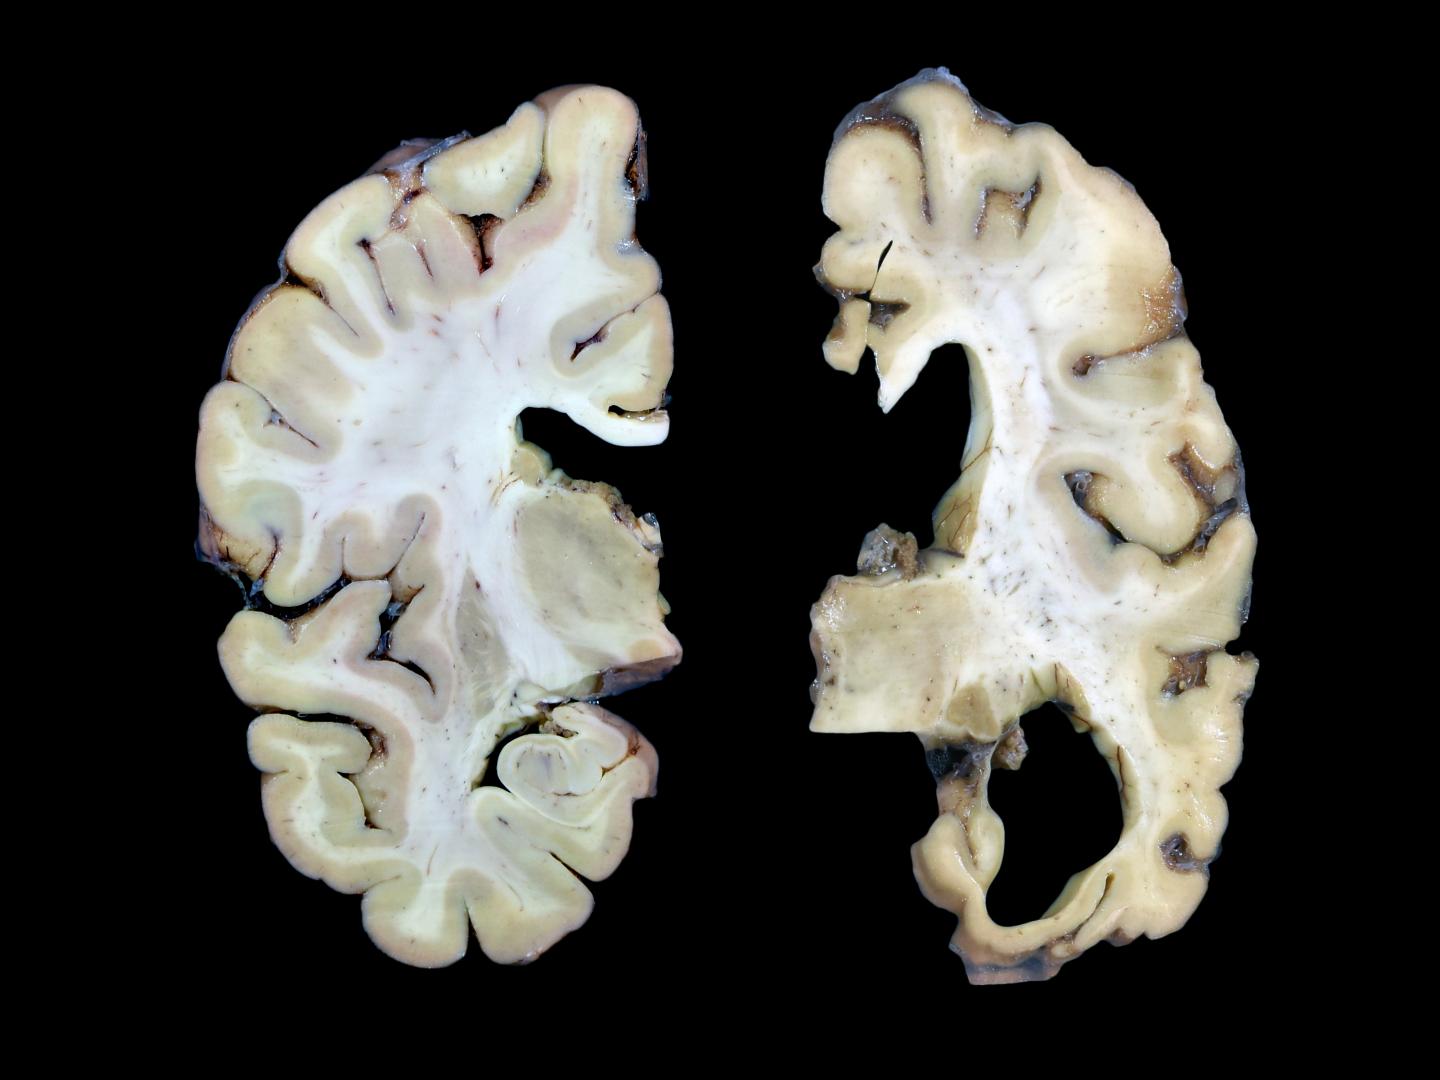 Normal brain/Alzheimer's brain